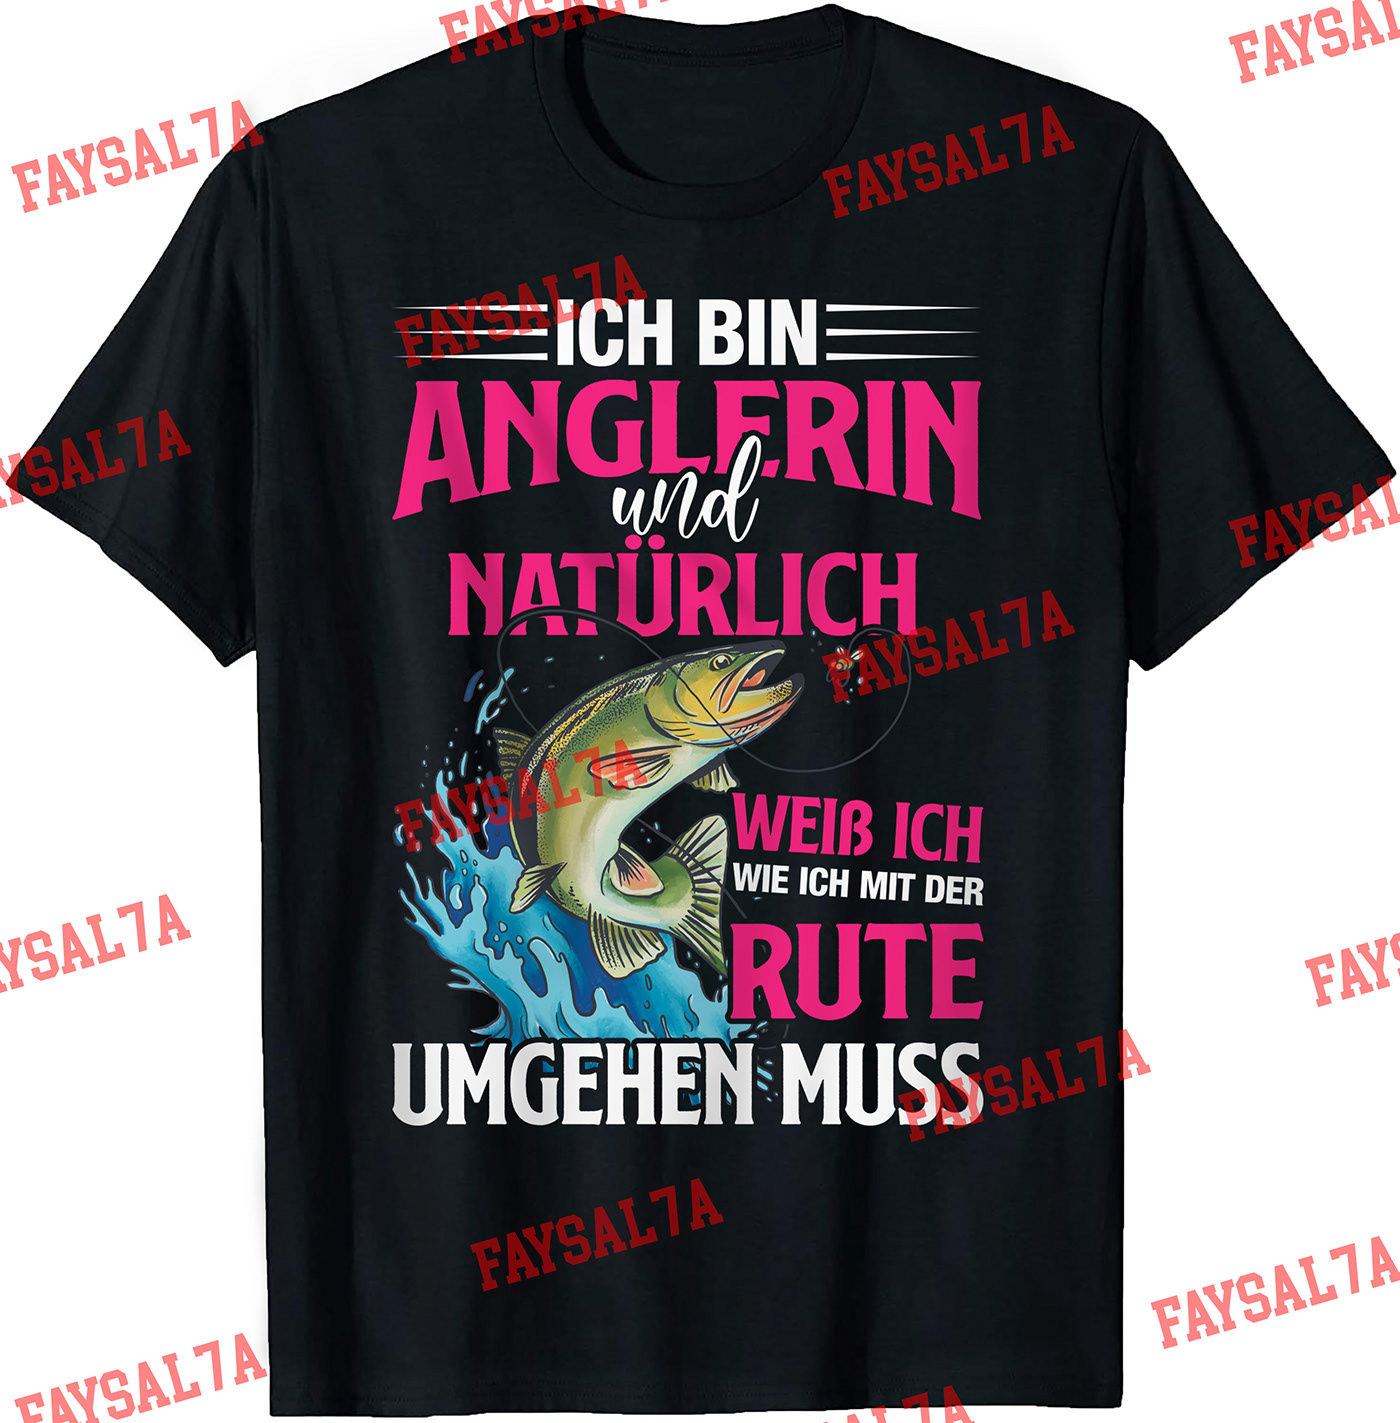 Clothing Fashion  Germany T-Shirt Design merchandise shirt t-shirt T-Shirt Design tshirt typography   typography t shirt